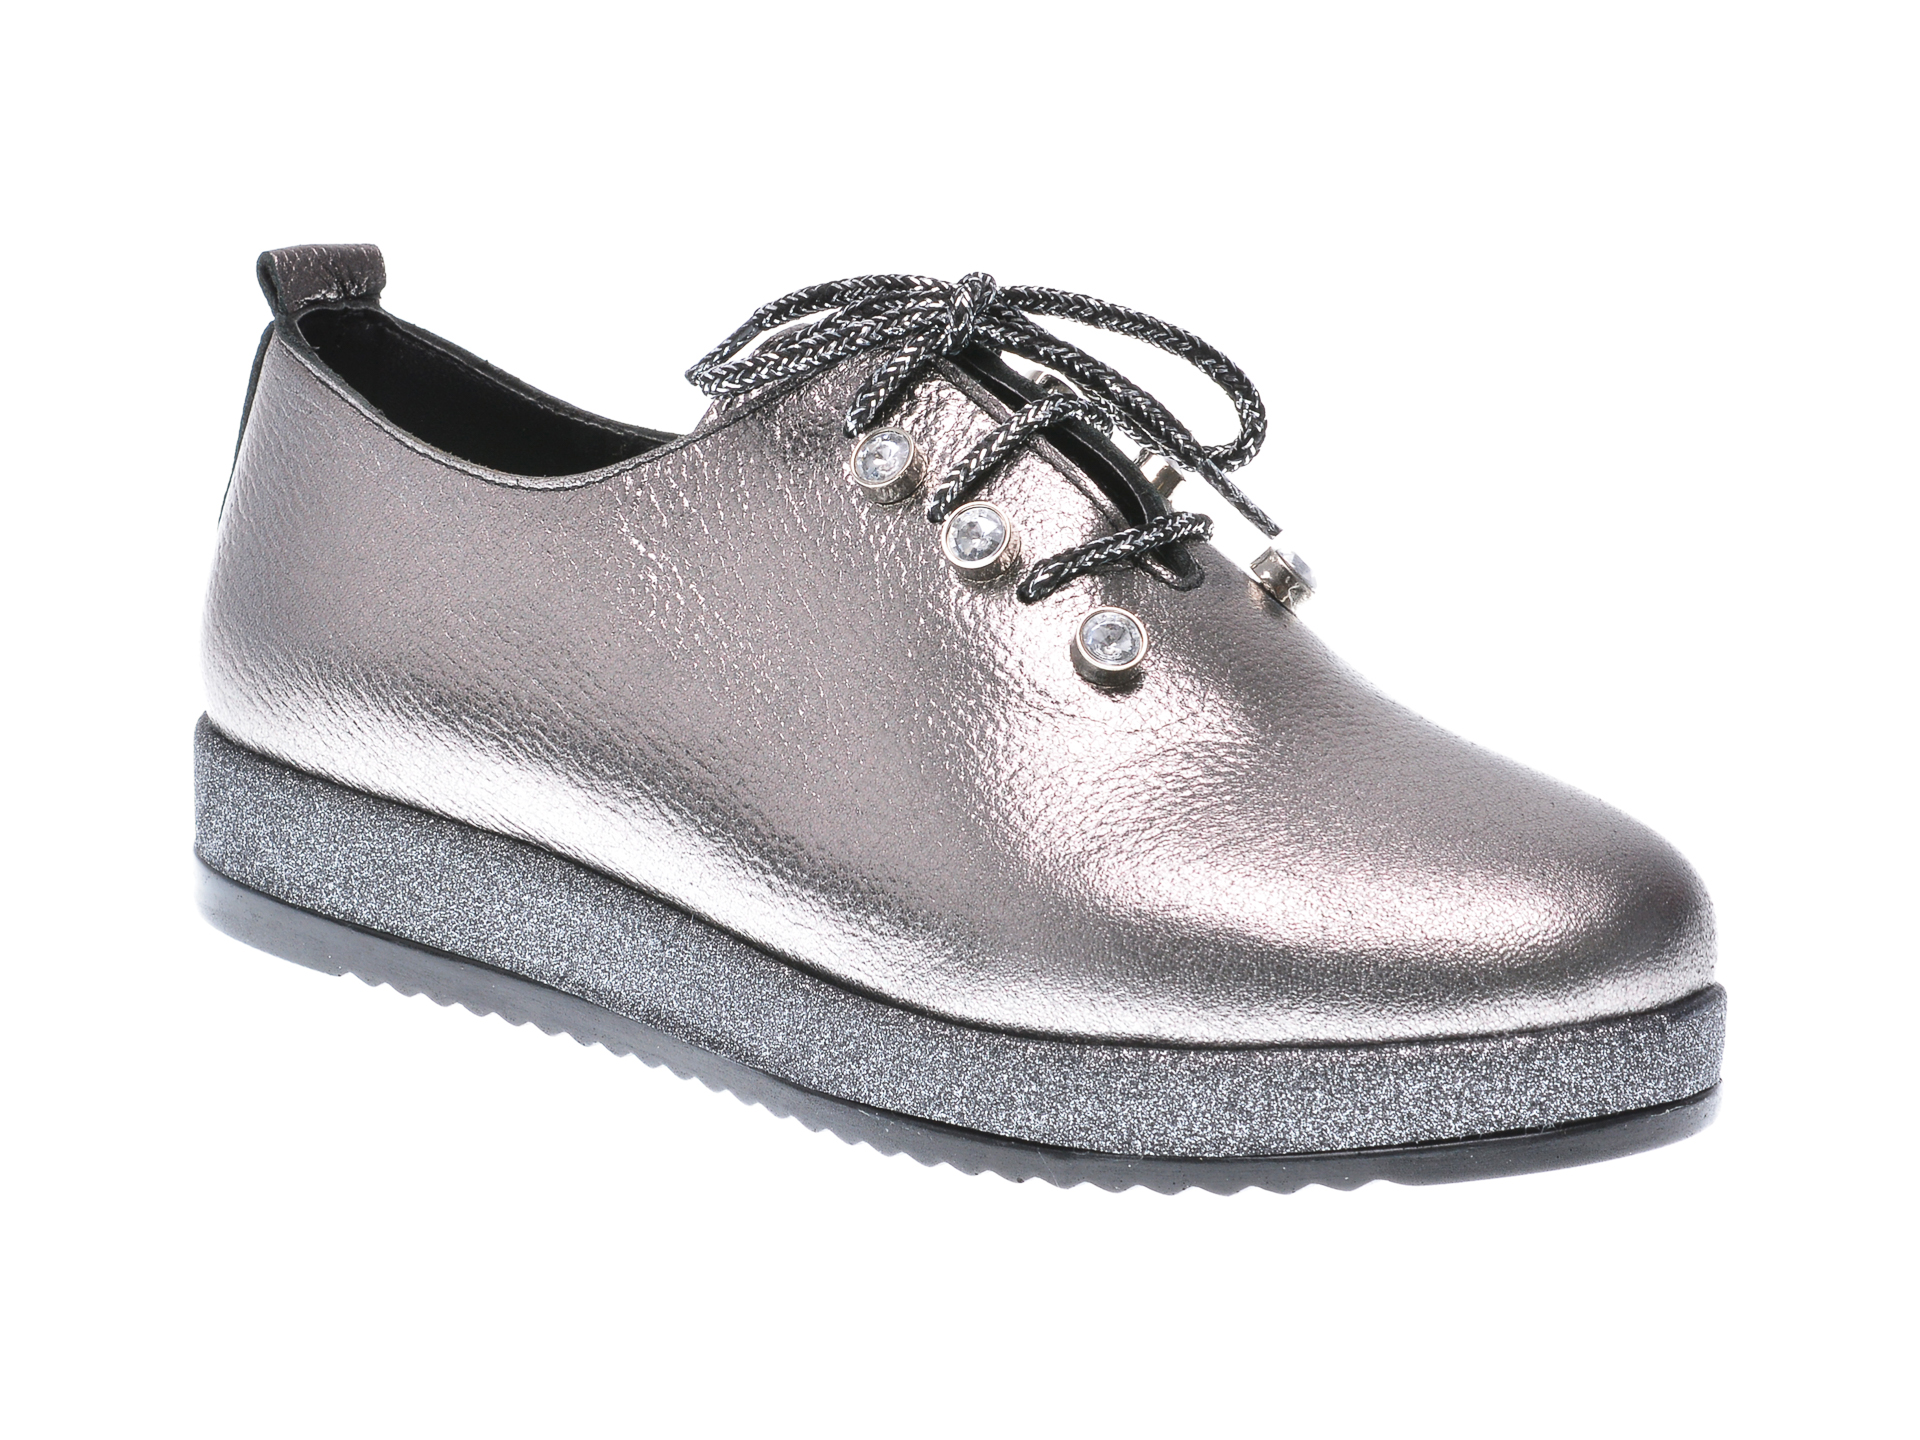 Pantofi FLAVIA PASSINI gri, Cl1905, din piele naturala